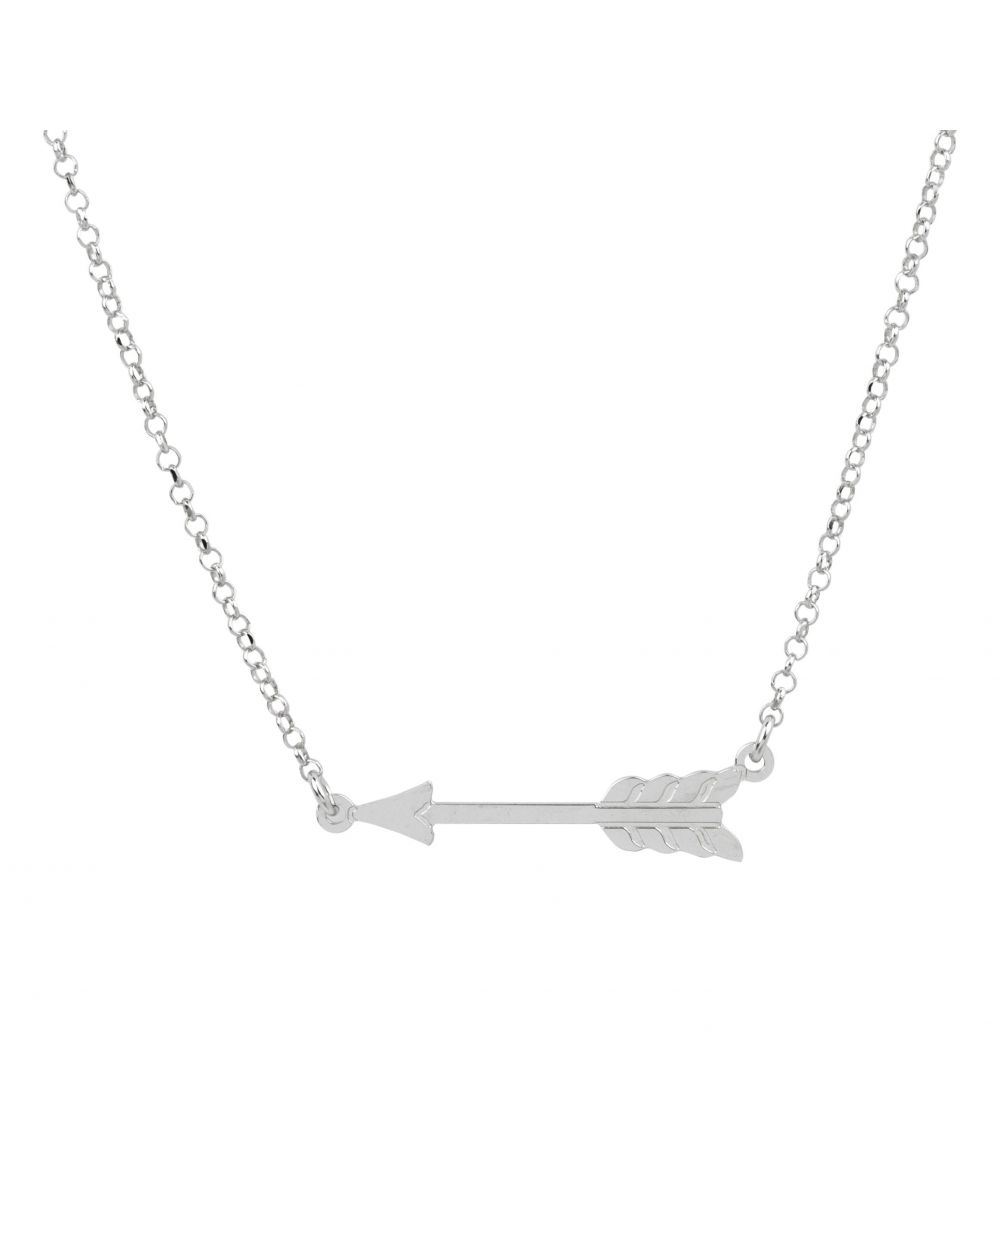 Bijou en argent - Necklace horizontal arrow 925